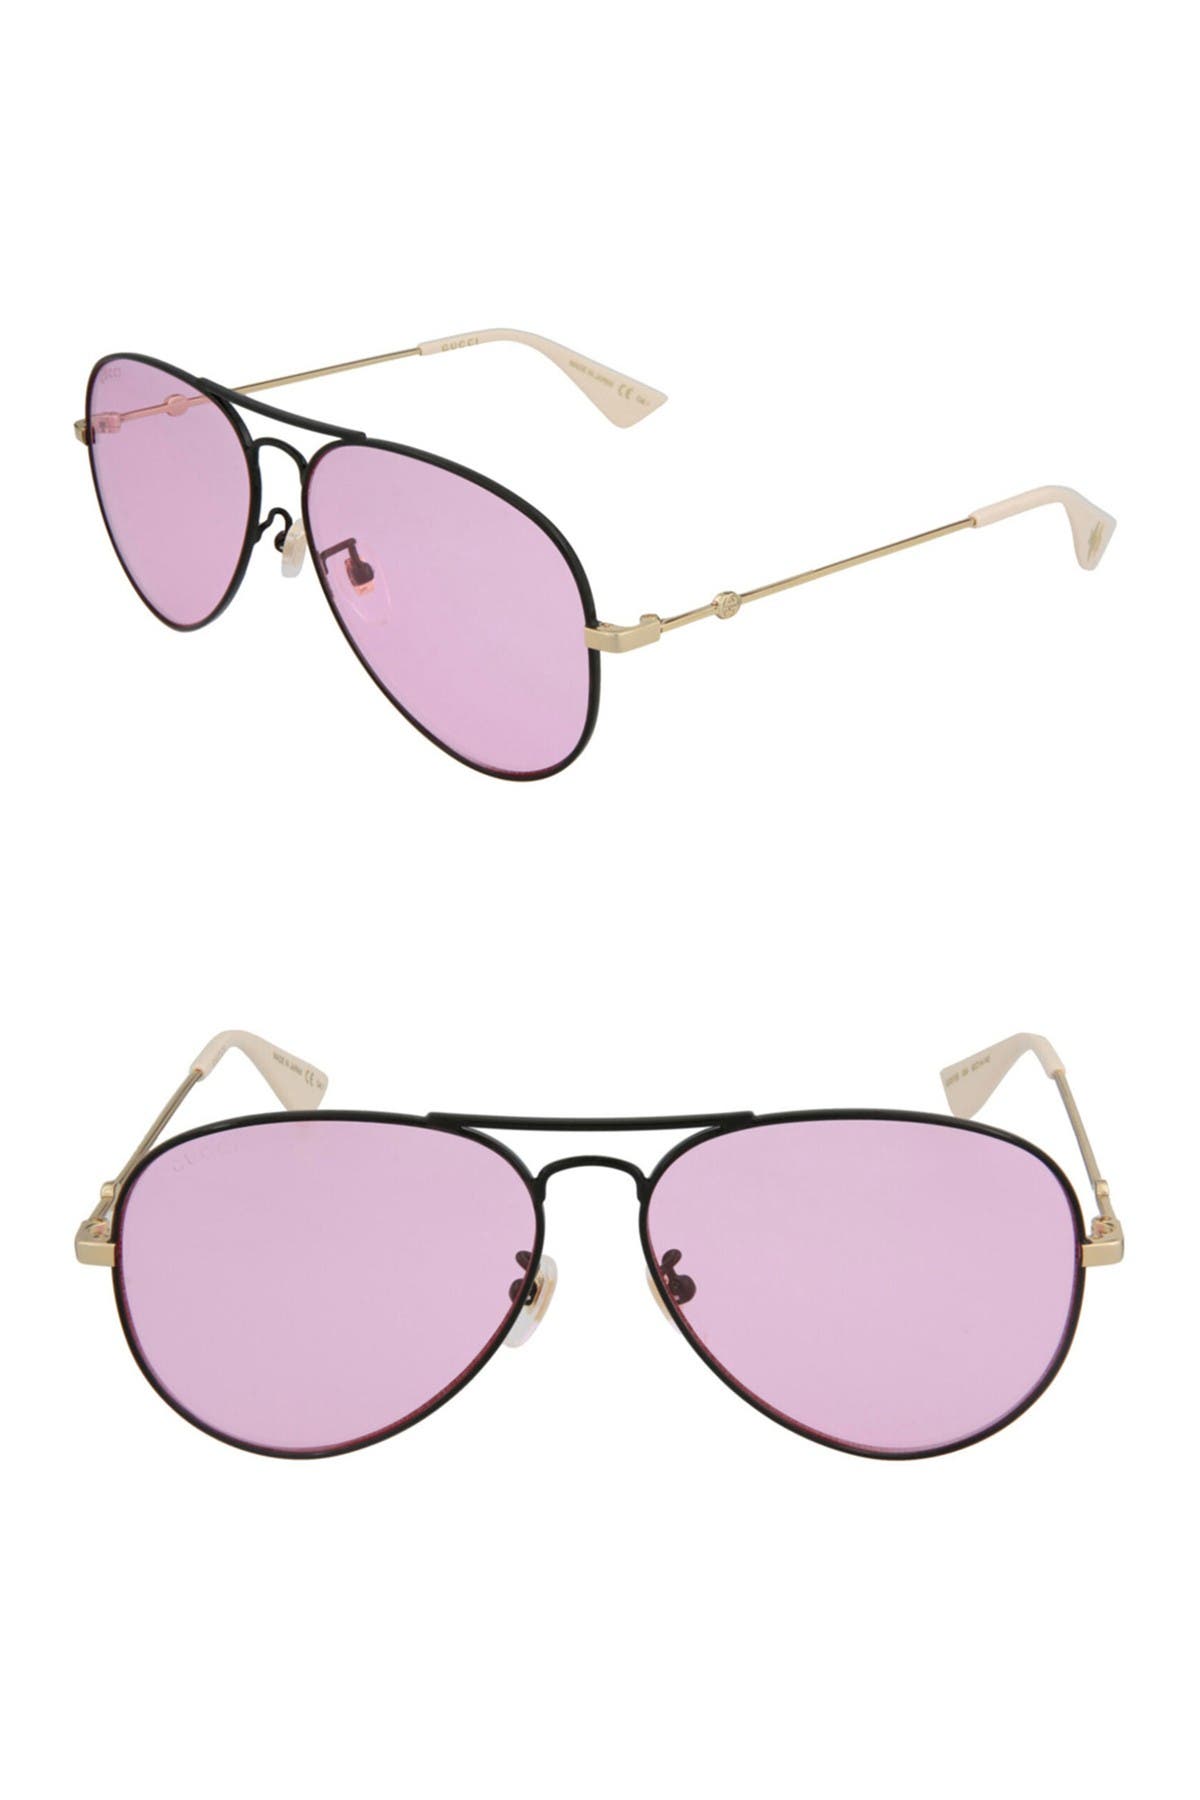 Gucci 60mm Fashion Aviator Sunglasses In Black Gold Pink